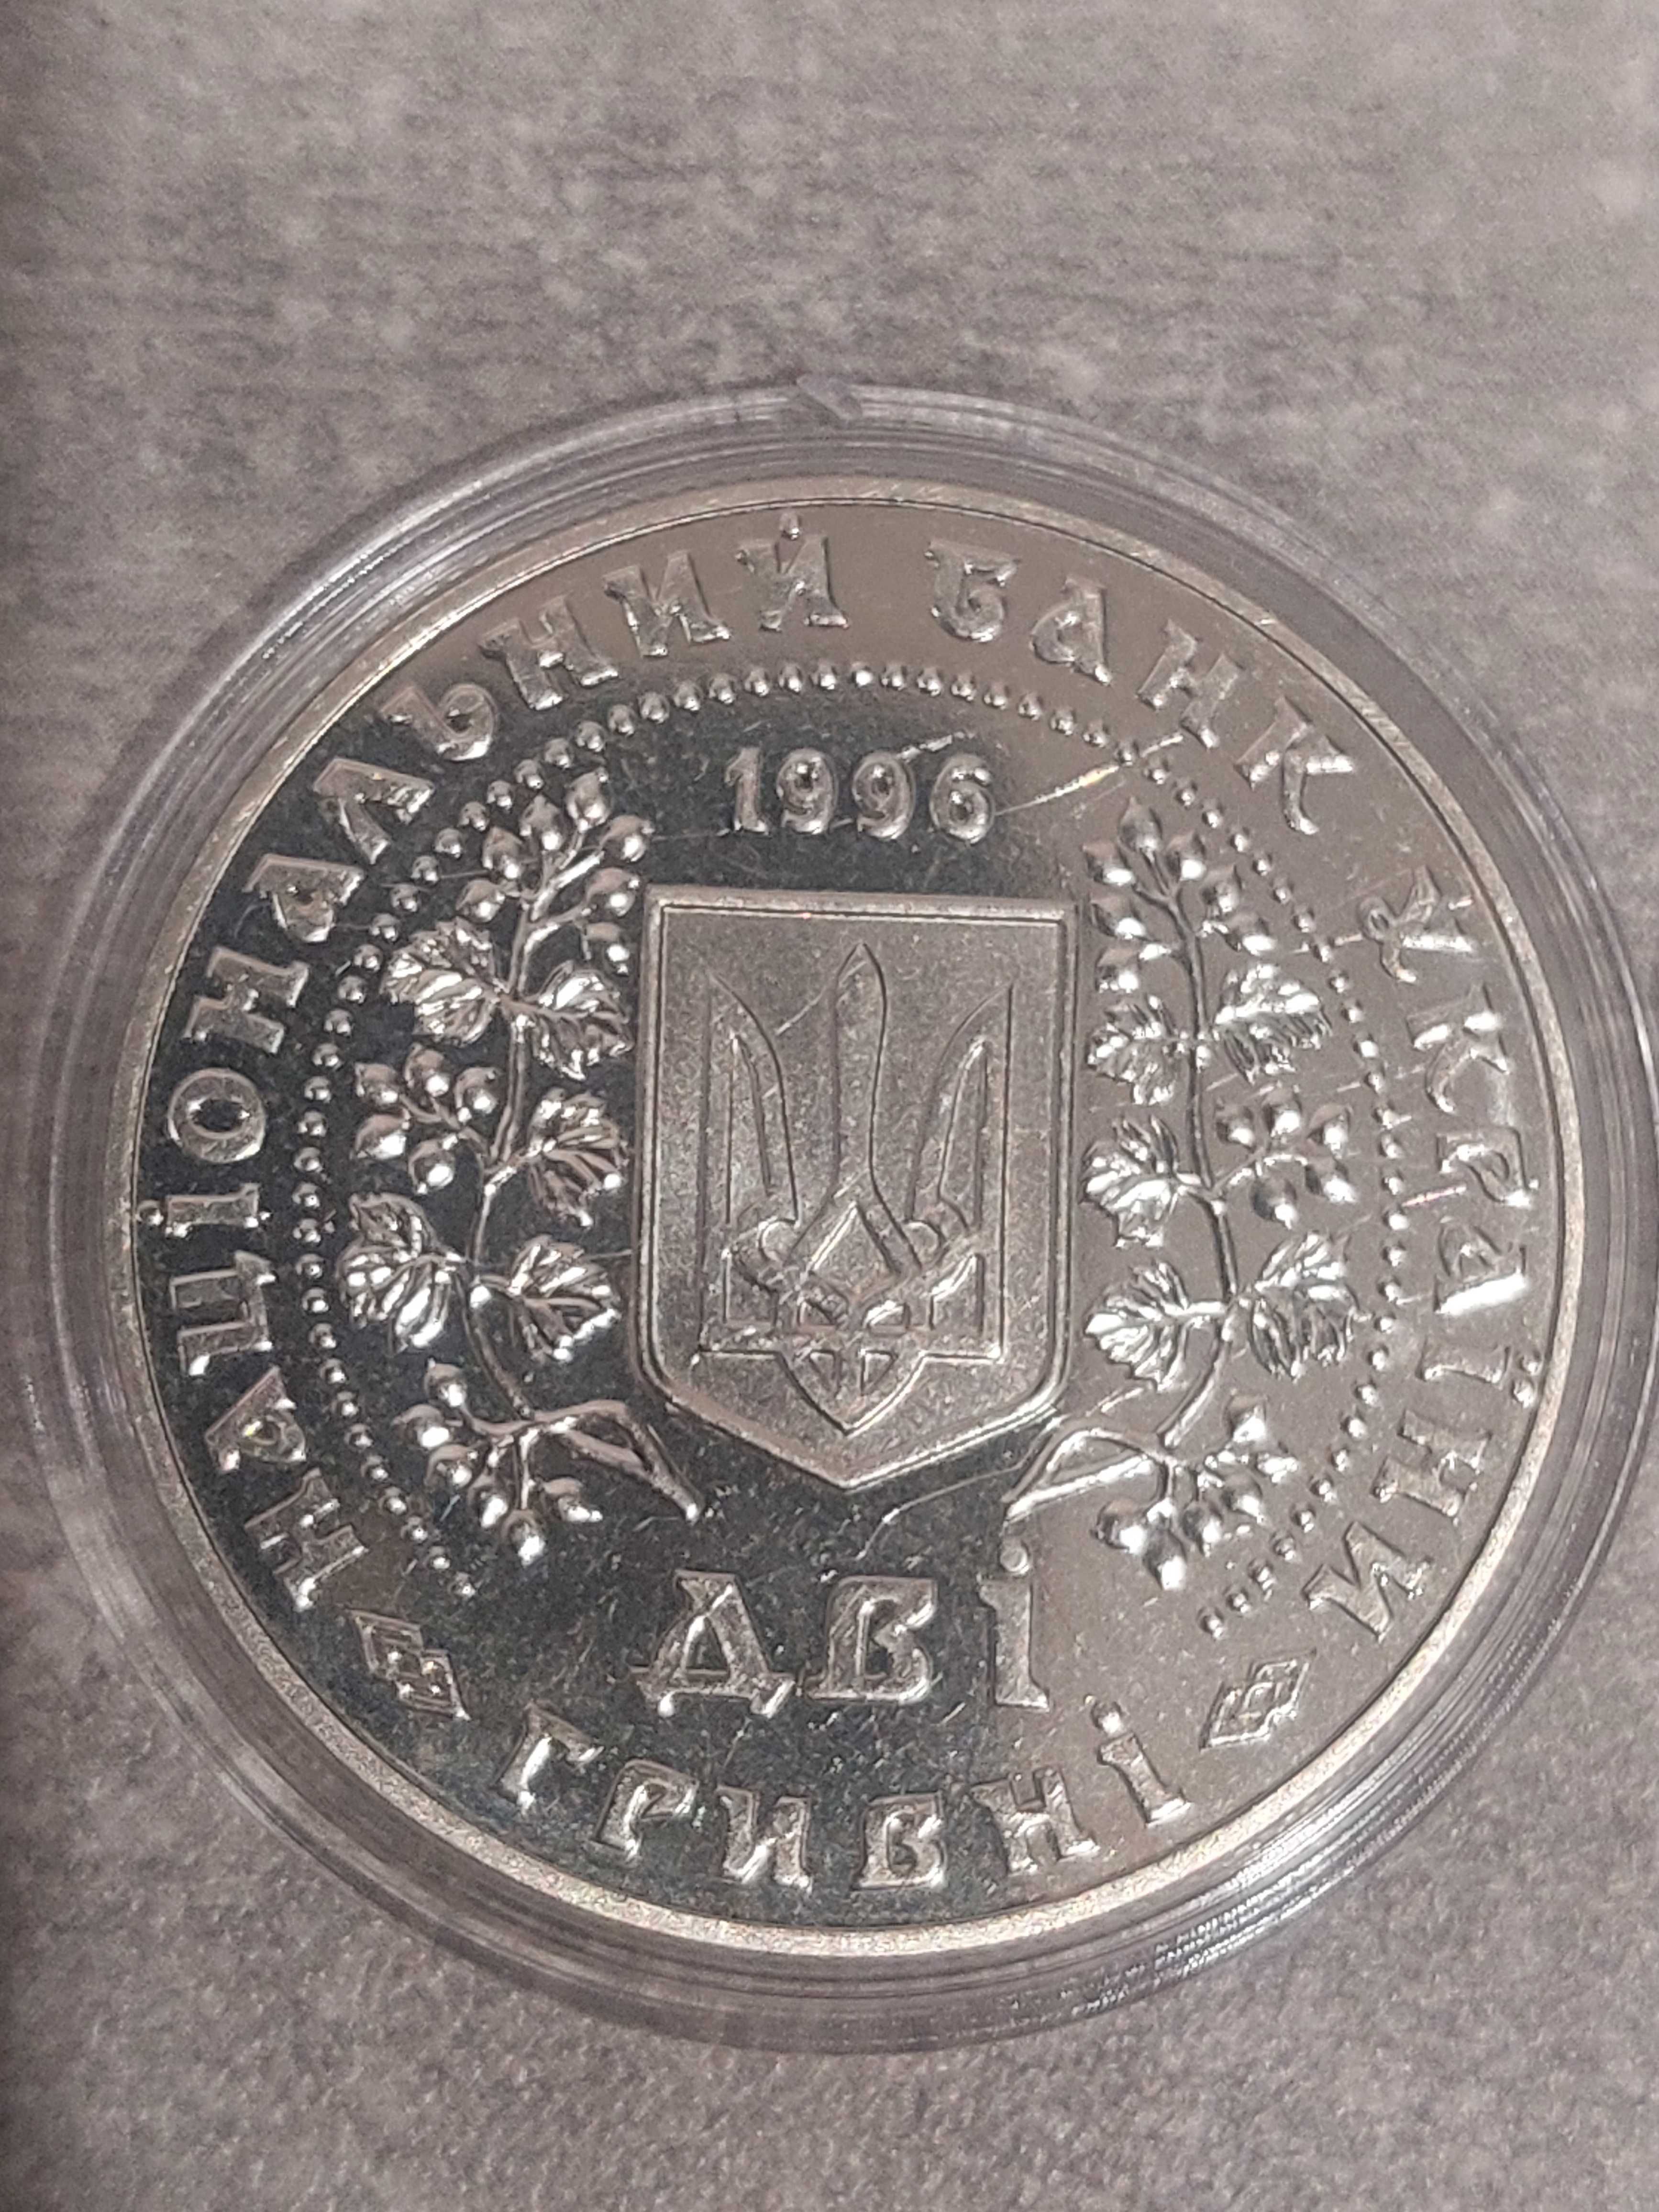 2 гривны 1996 г. Монеты Украины